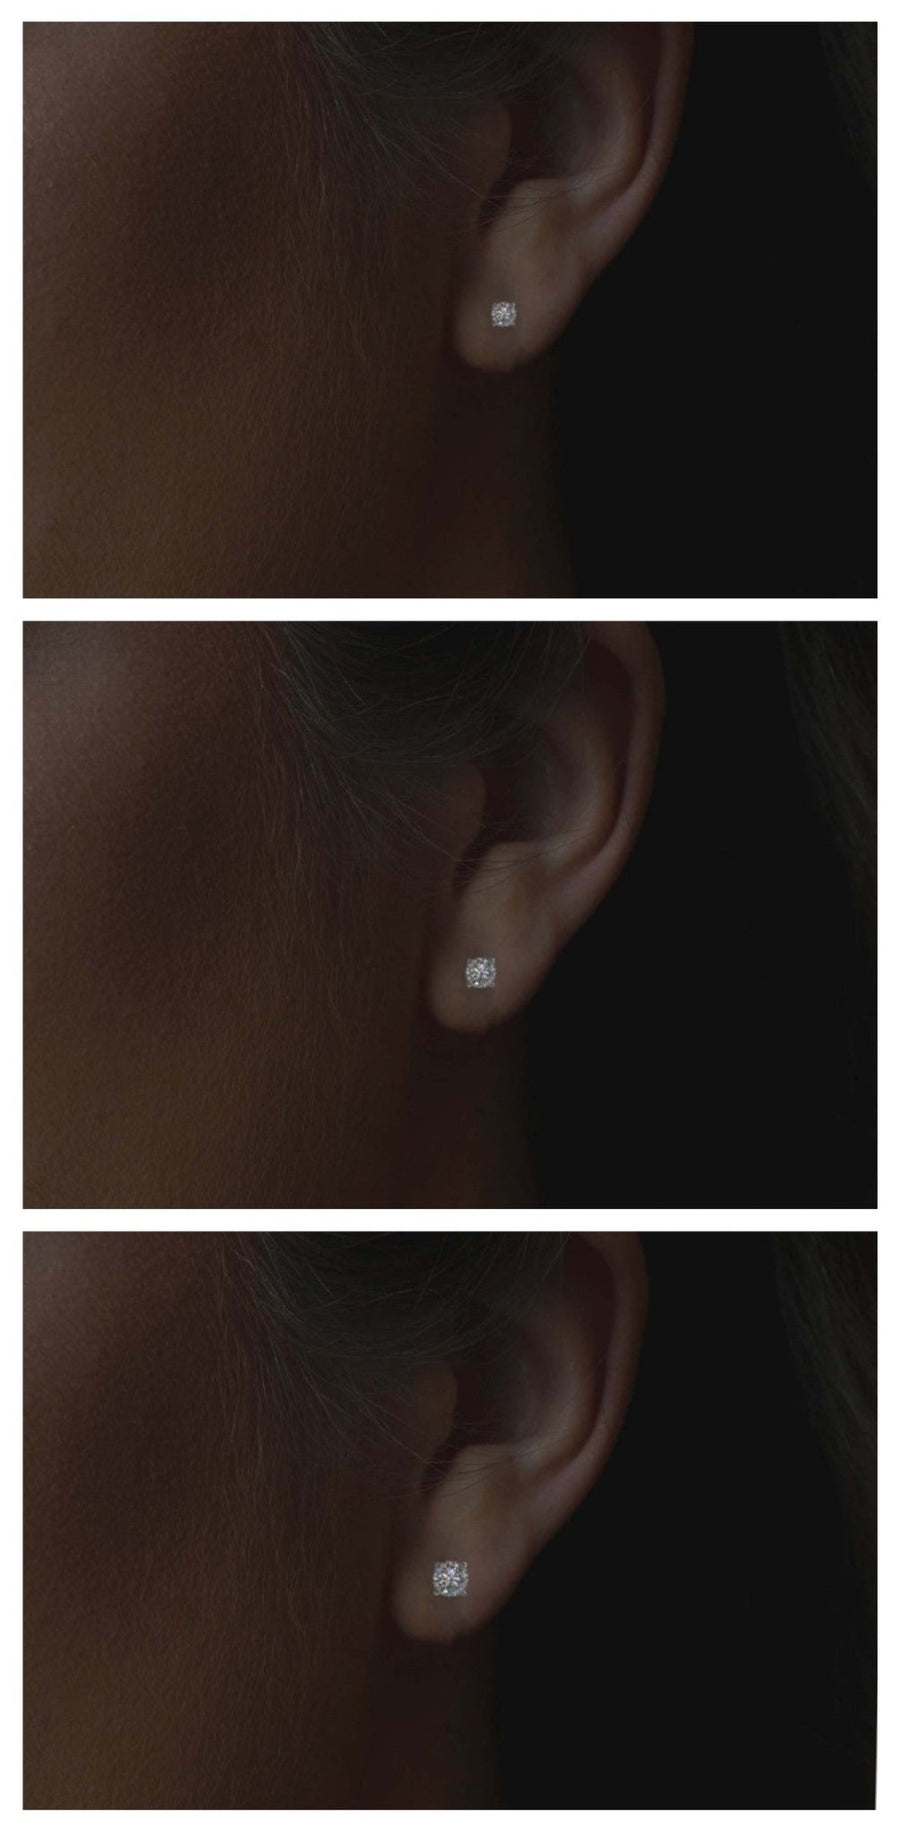 Solitaire Diamond Stud Earrings - Eliise Maar Jewellery